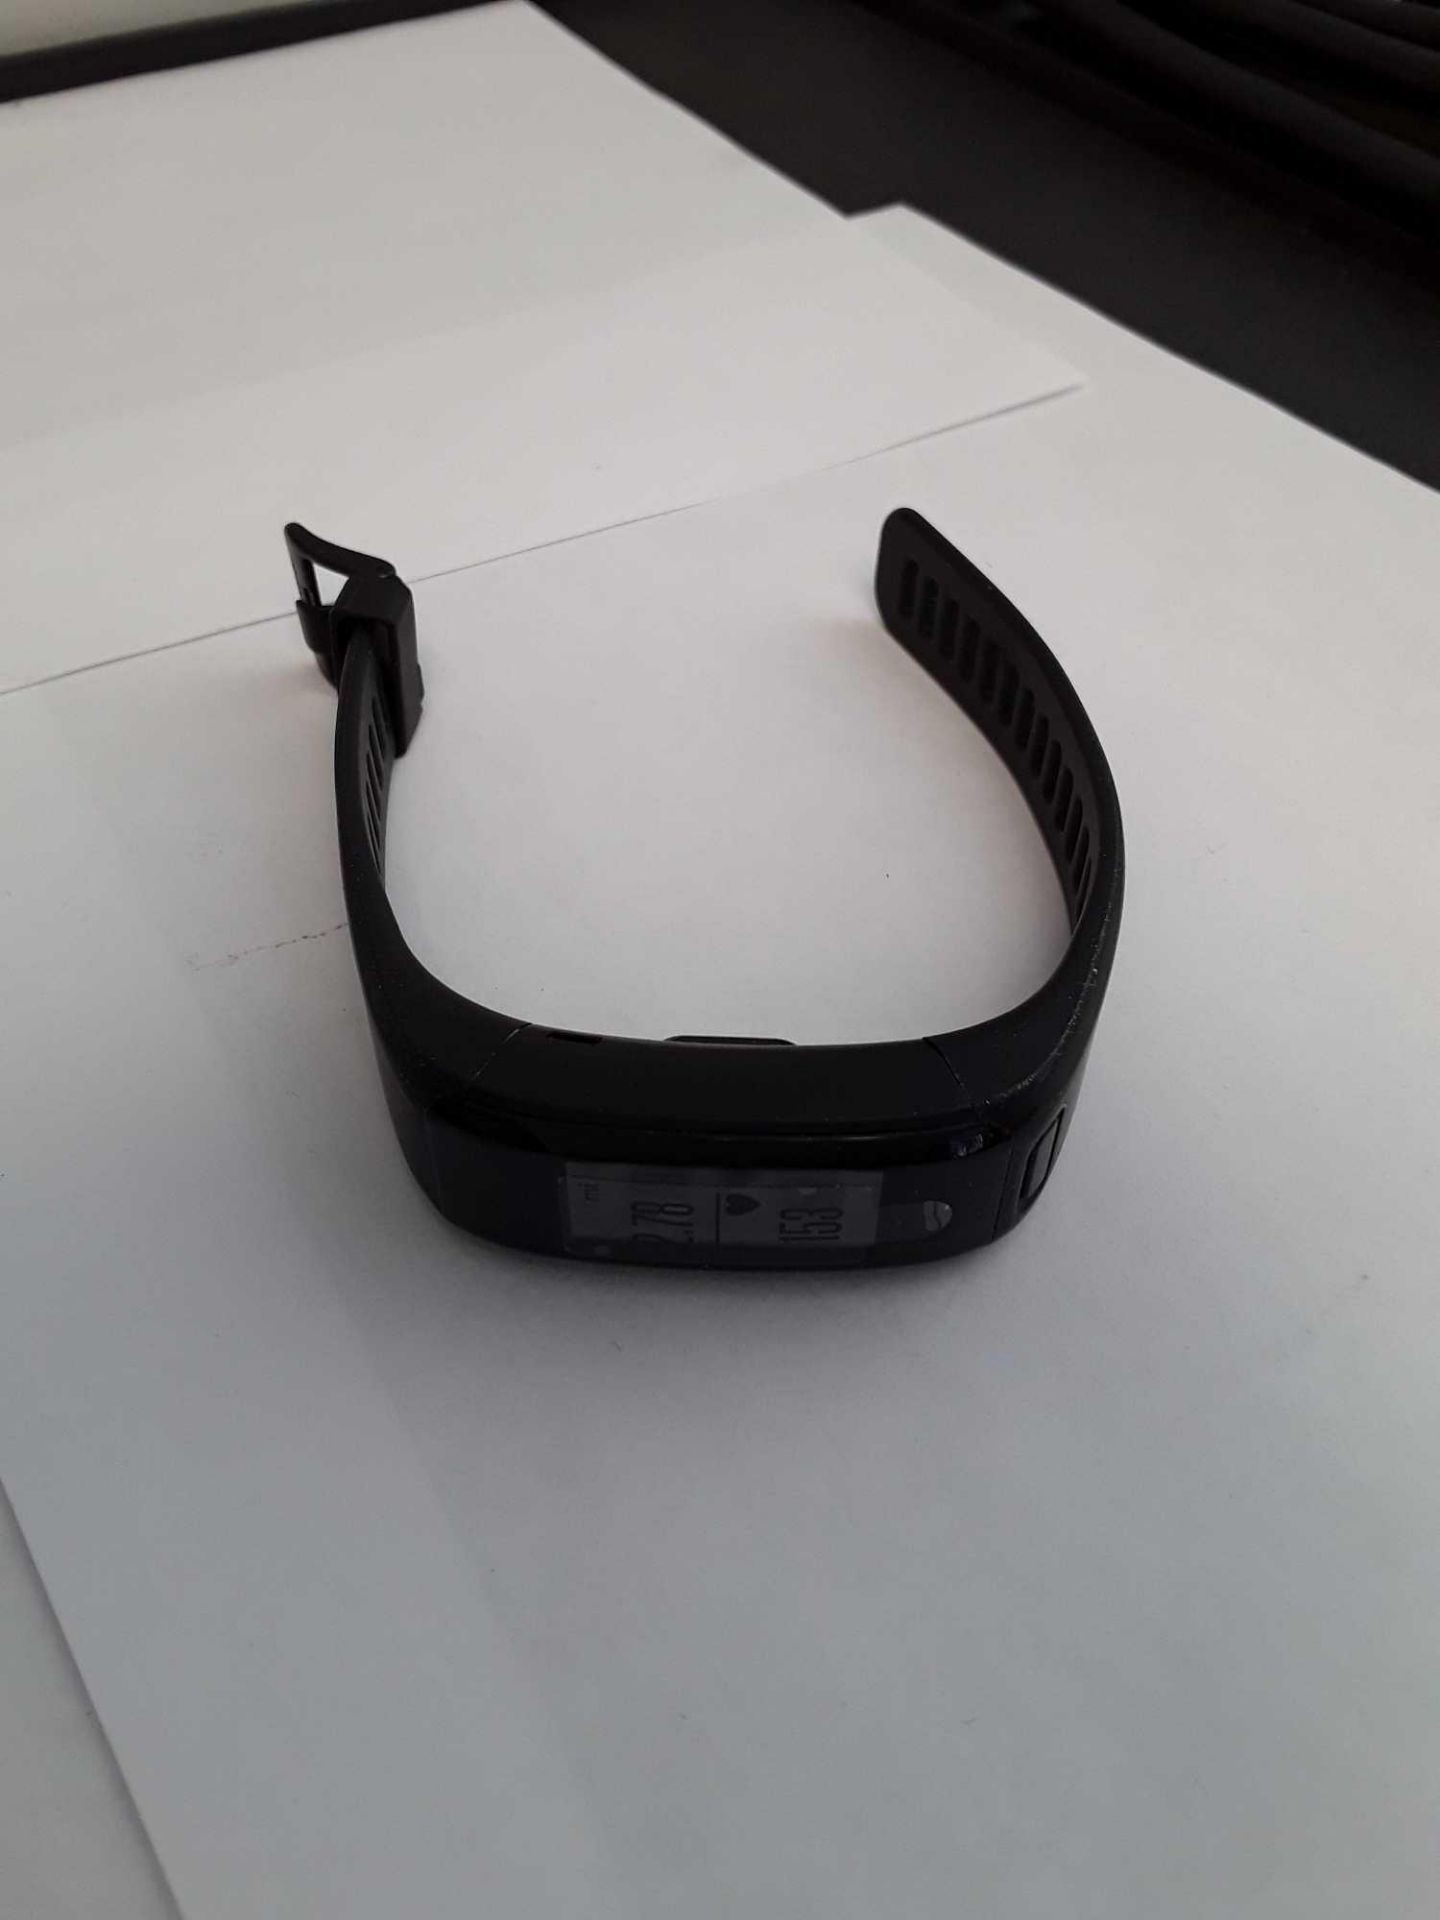 Garmen Vivo Smart HR - Wrist Heart Rate Technology - Image 2 of 2